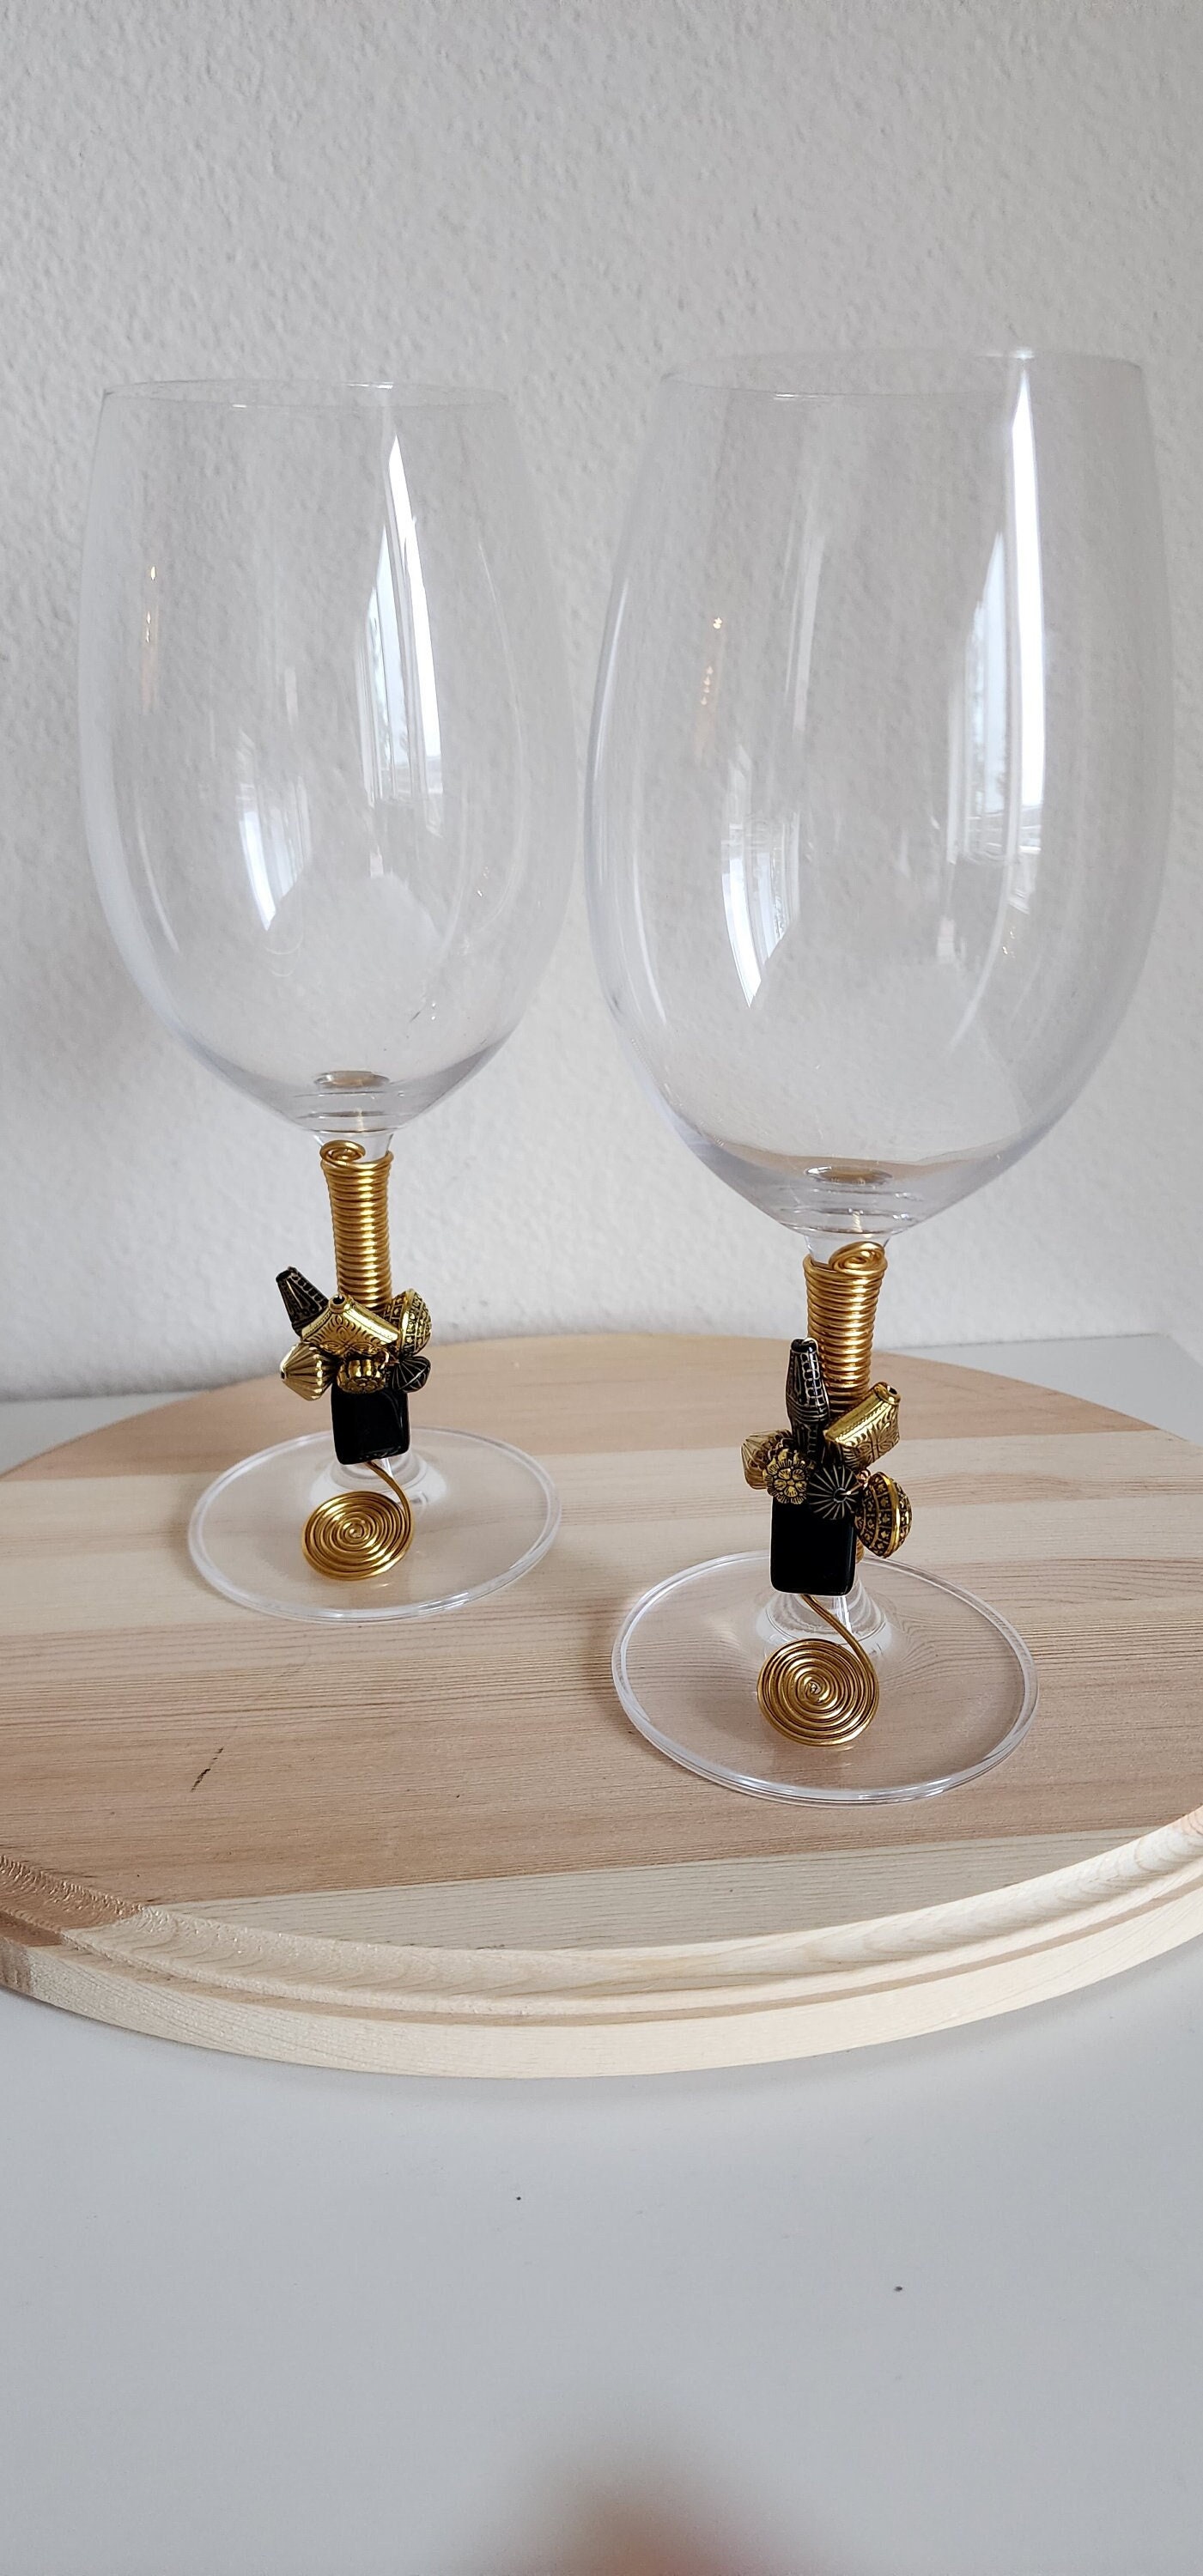 12 Pack  7oz Gold Glittered Plastic Short Stem Wine Glasses